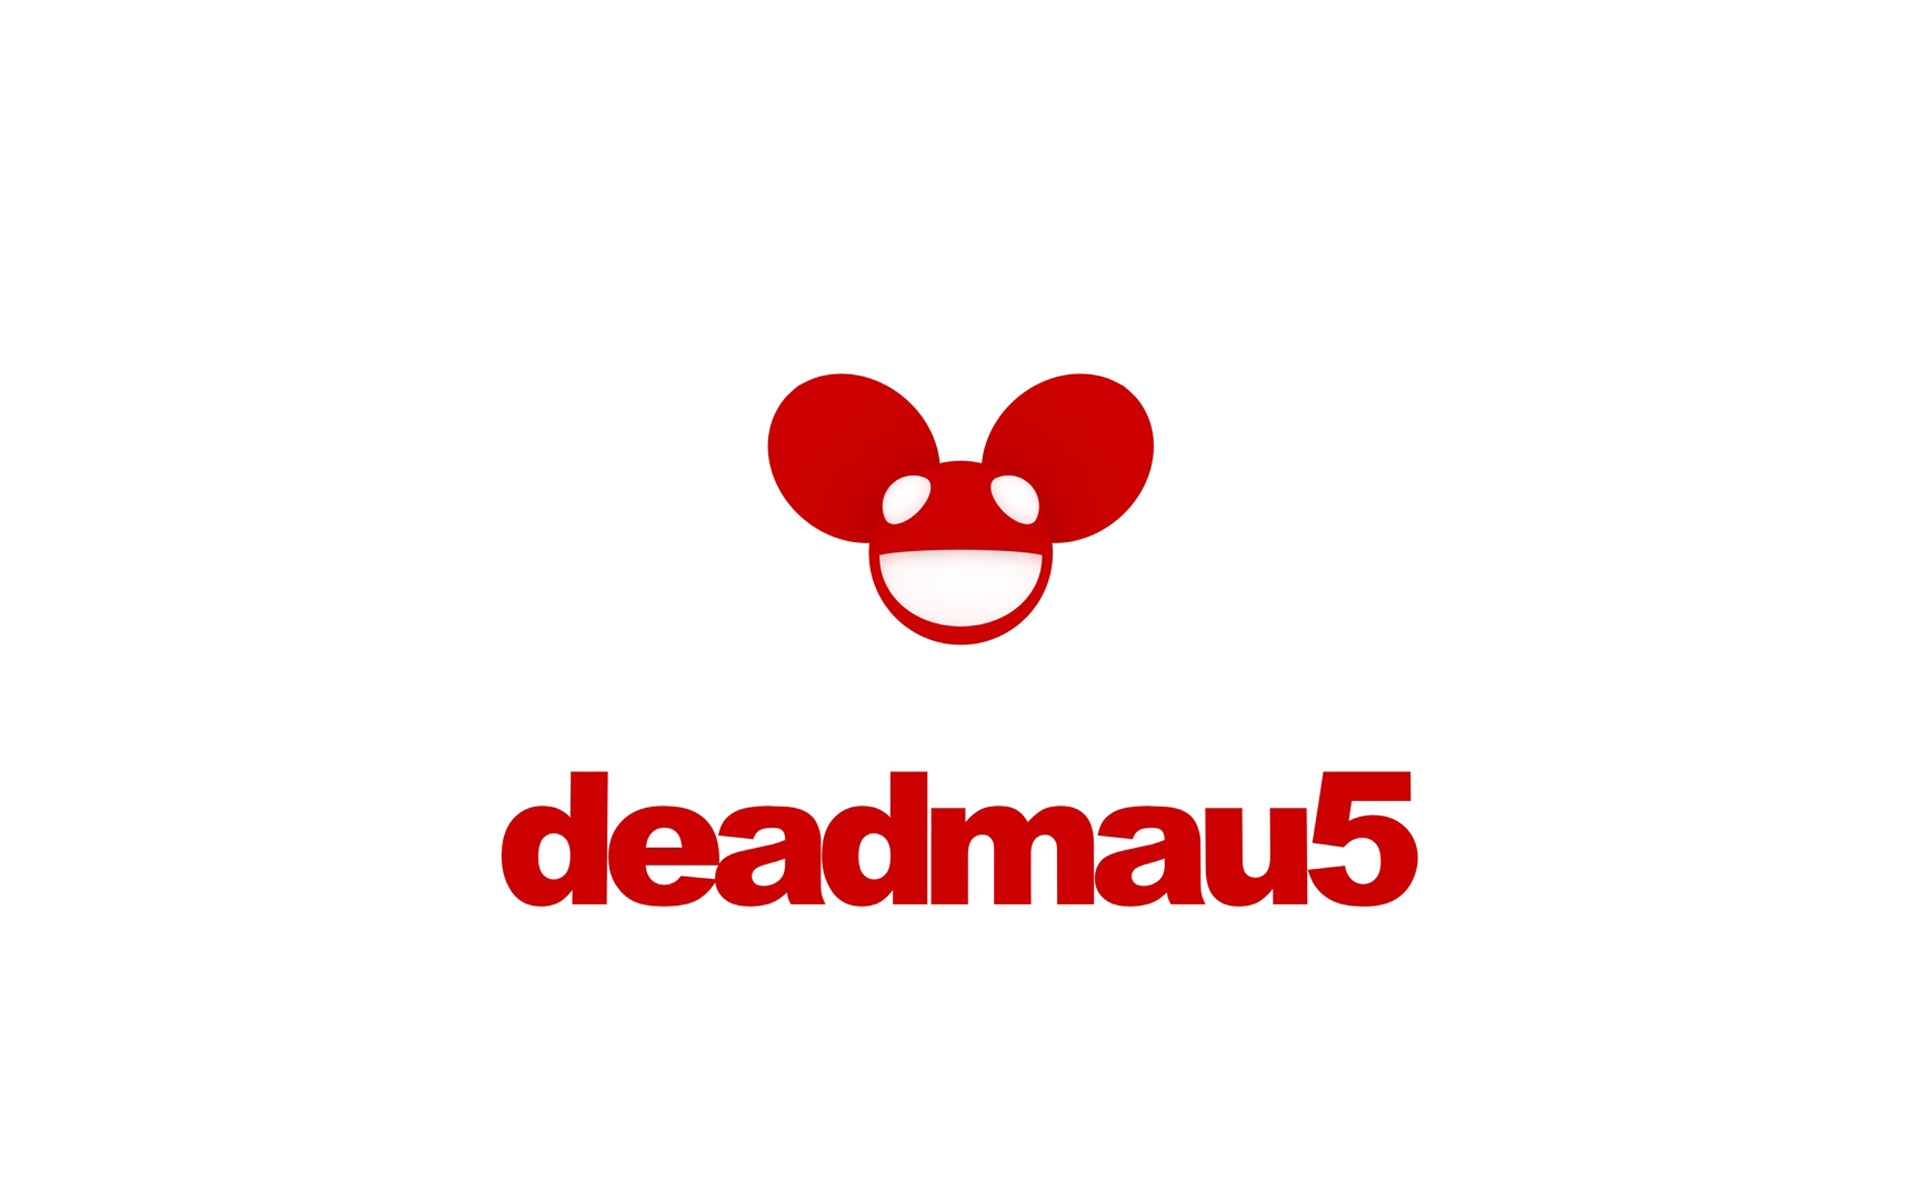 Deadmau5 Logo for 1920 x 1200 widescreen resolution